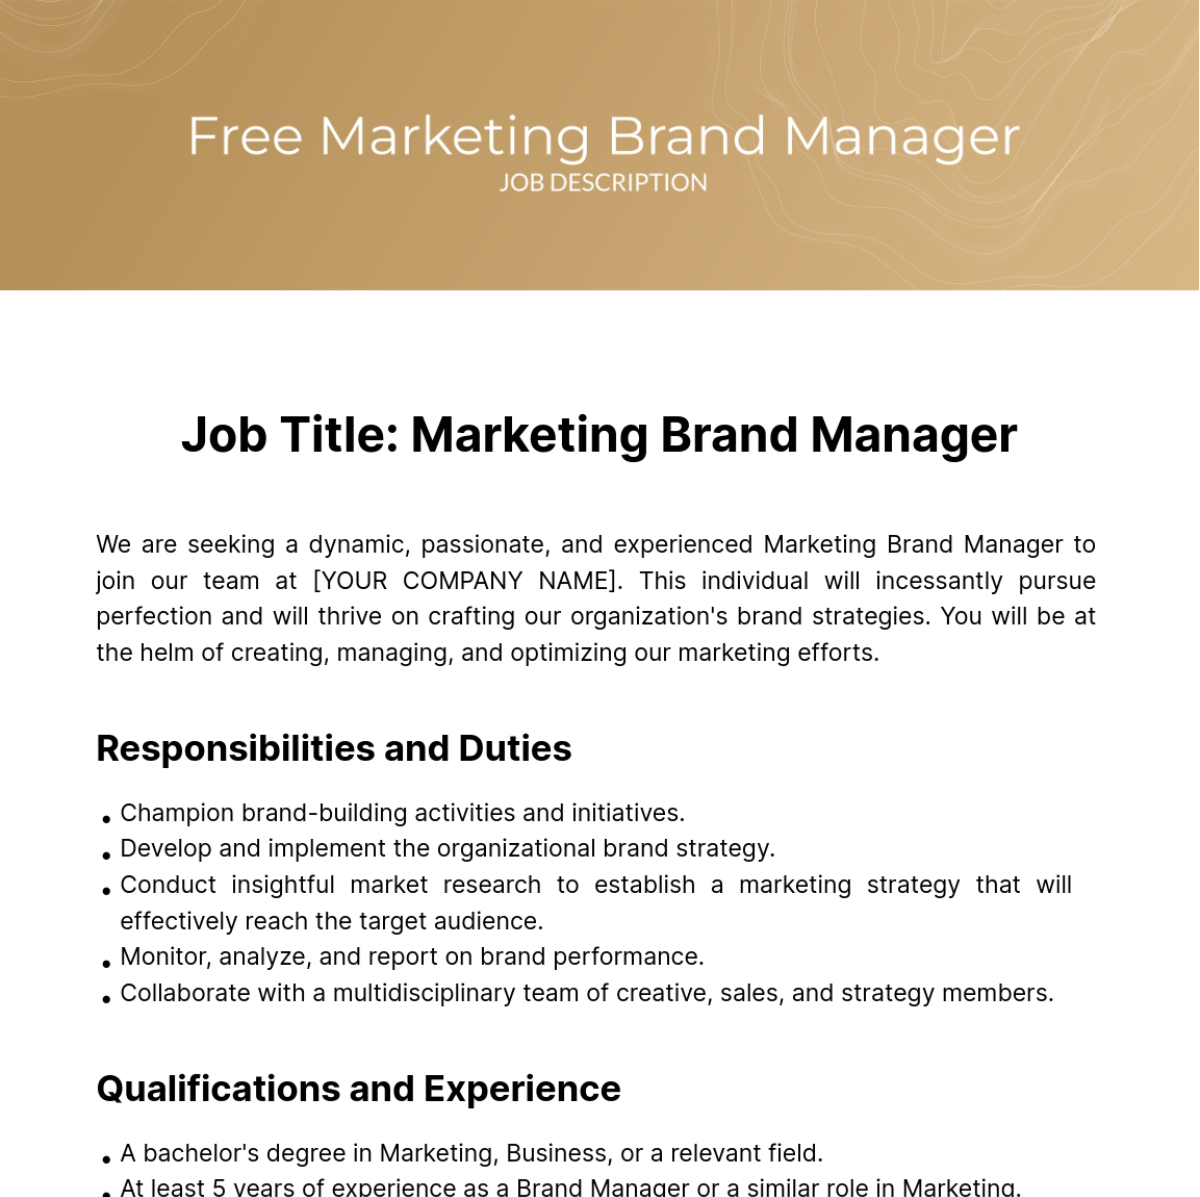 Marketing Brand Manager Job Description Template